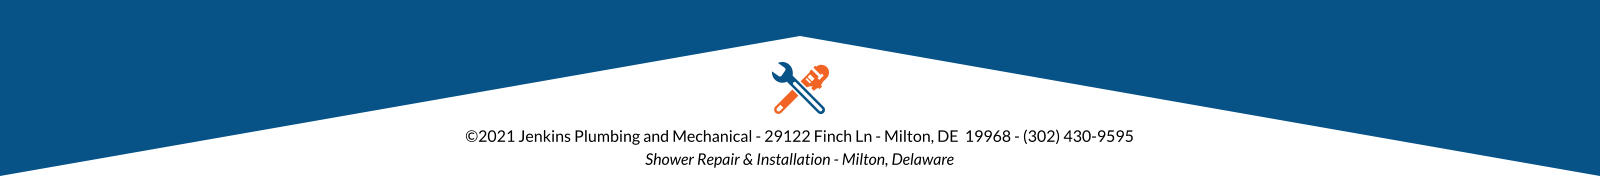 Shower Repair & Installation - Milton, Delaware ©2021 Jenkins Plumbing and Mechanical - 29122 Finch Ln - Milton, DE  19968 - (302) 430-9595